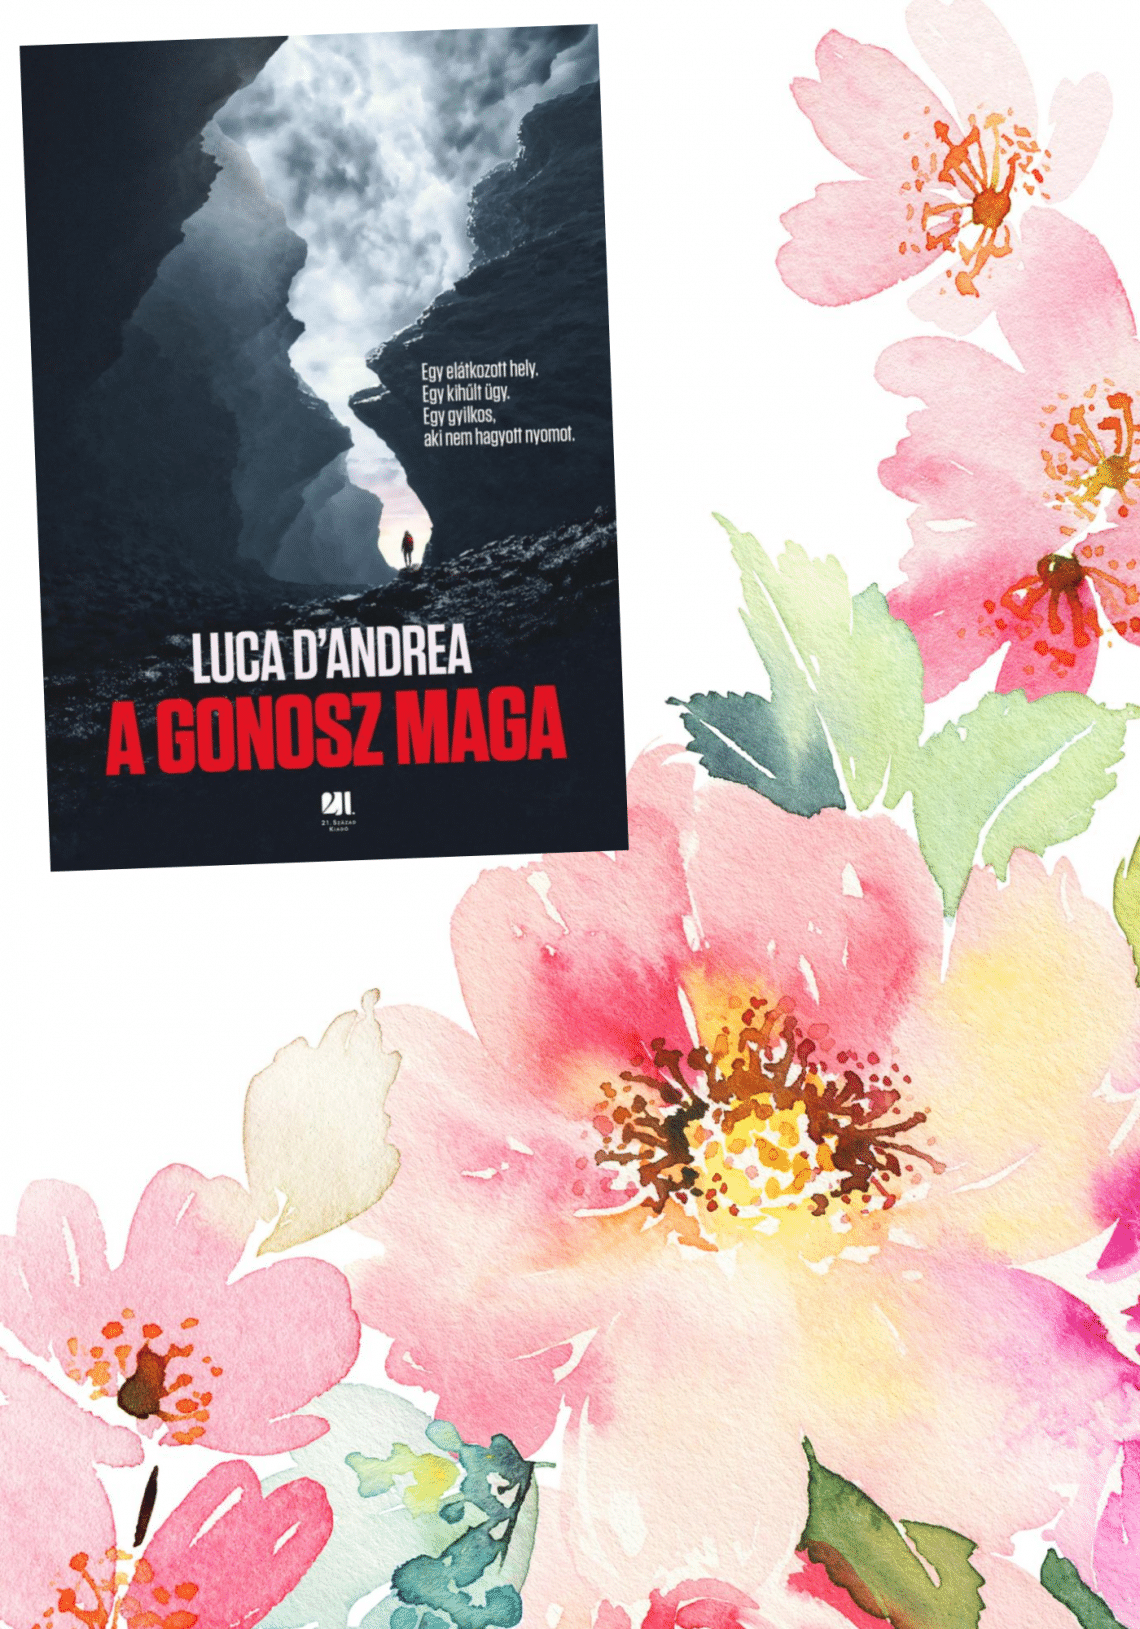 Luca D’Andrea – A gonosz maga